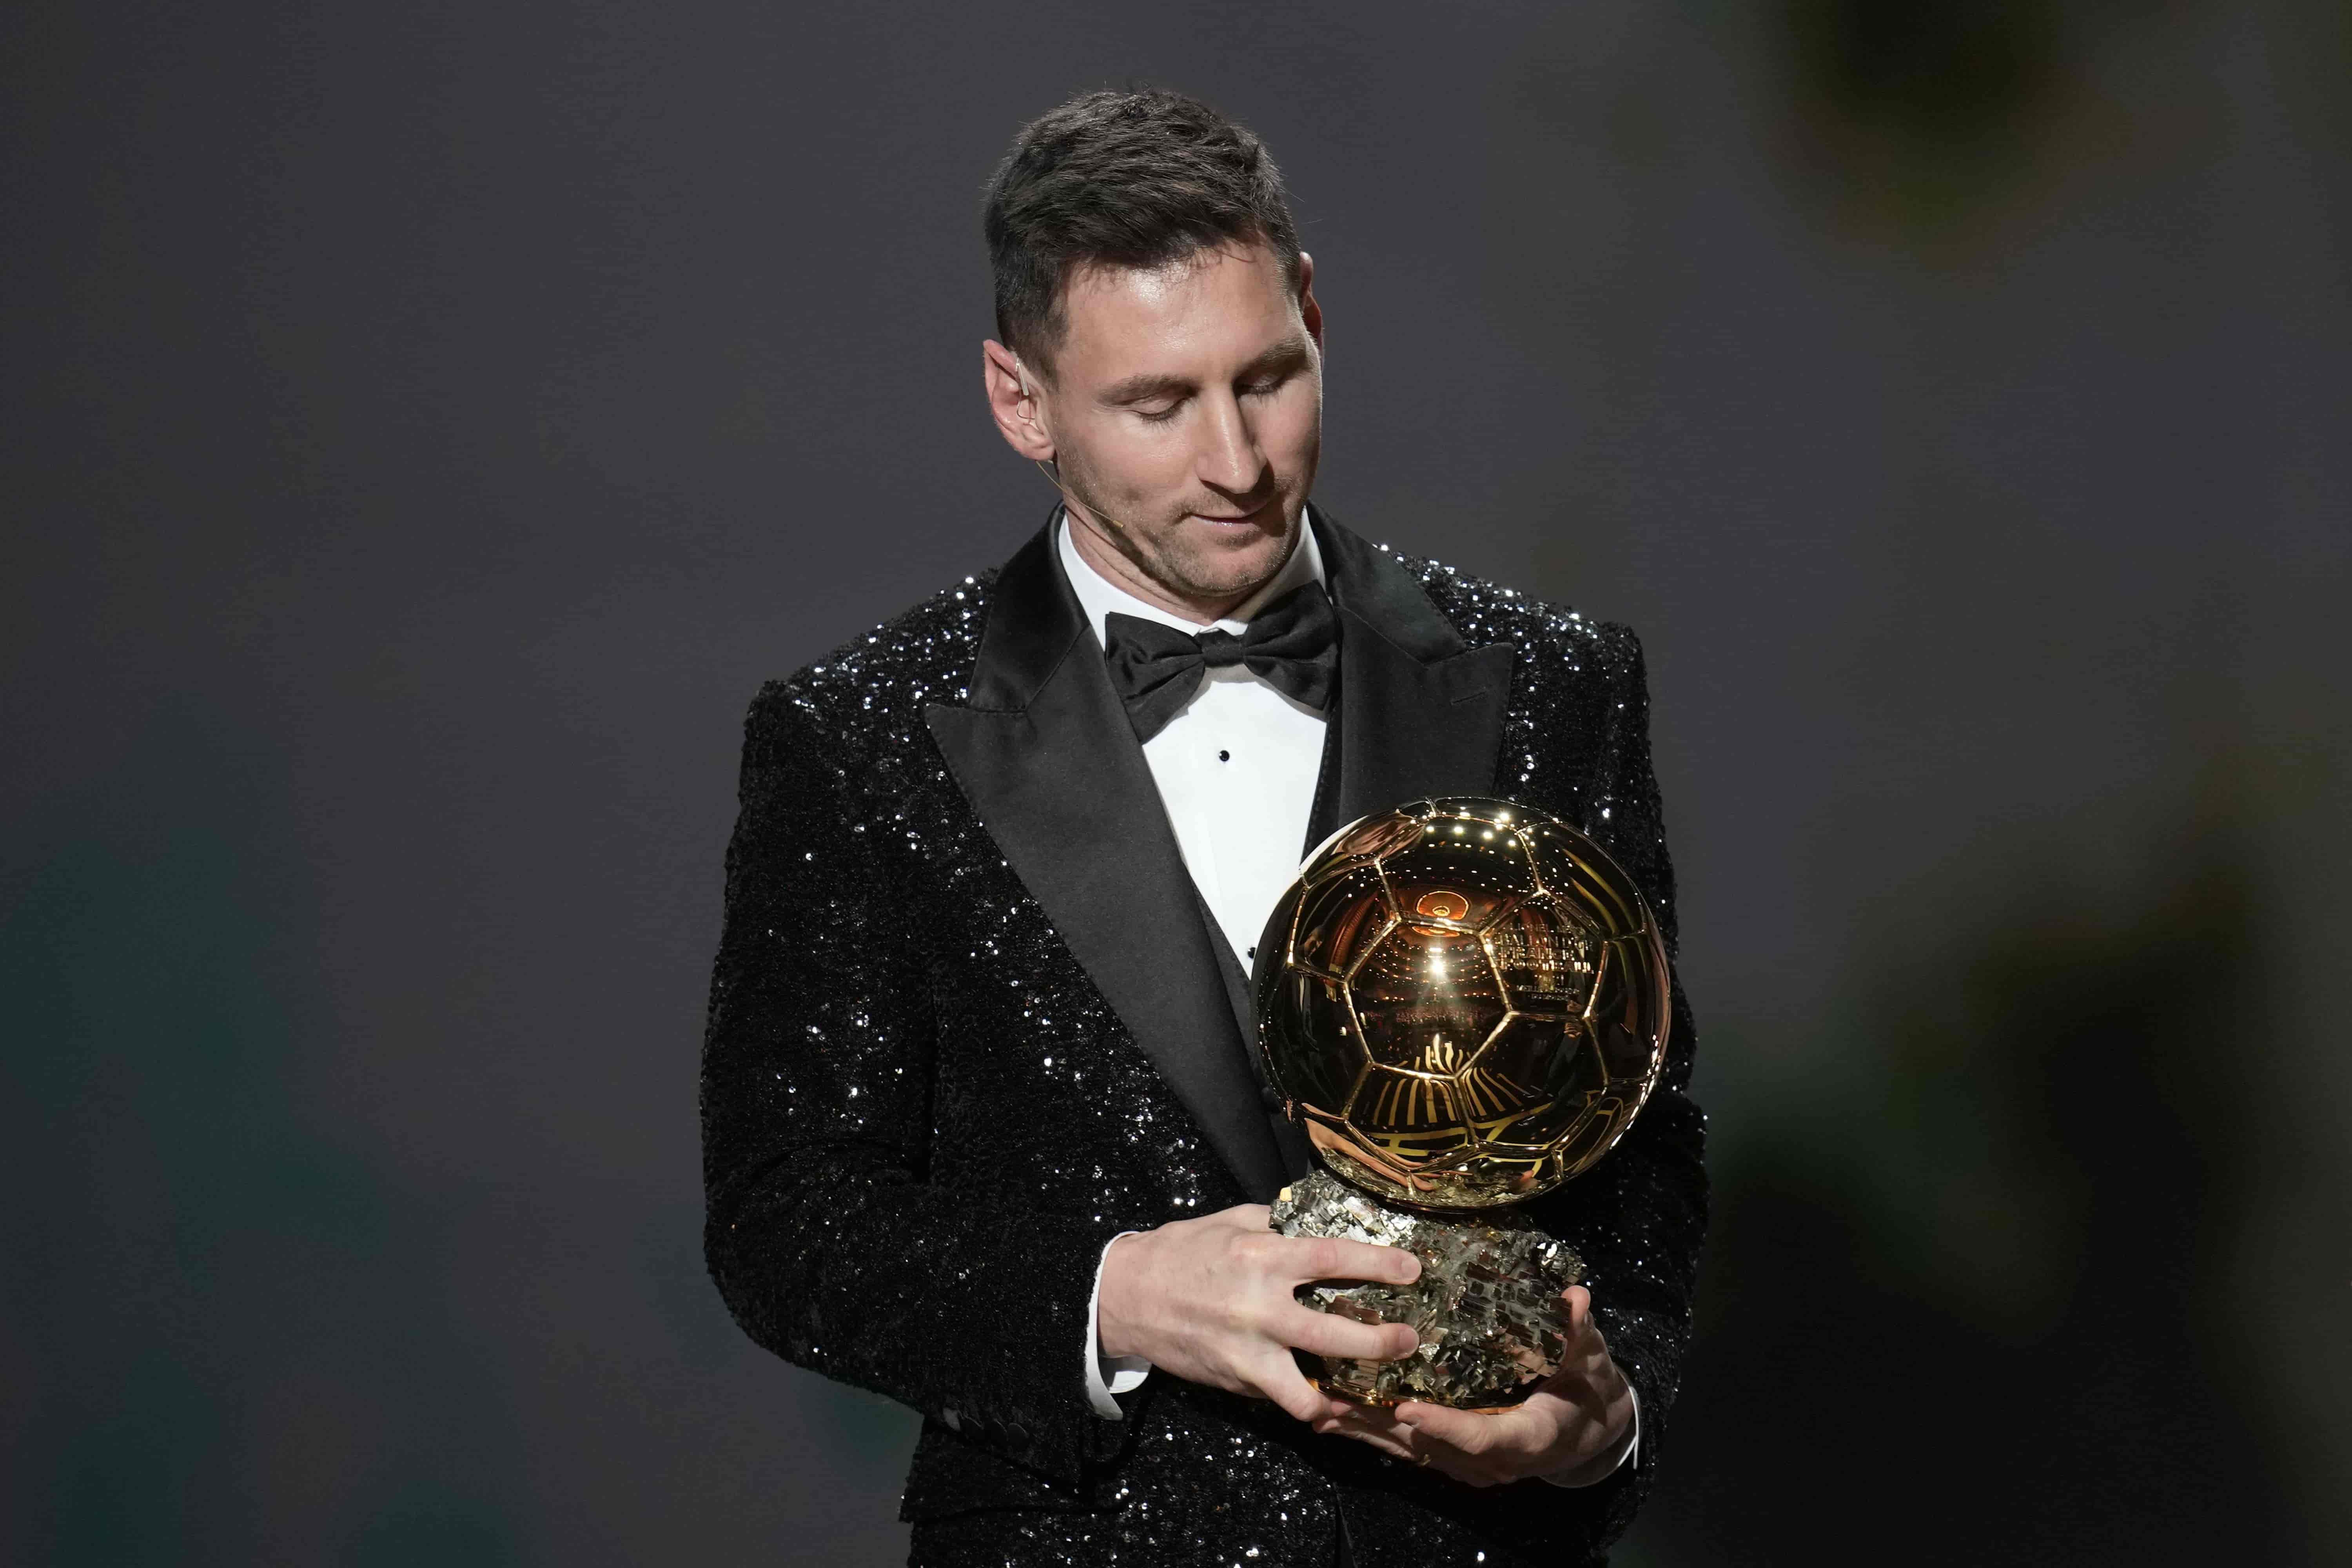 Messi gana su séptimo Balón de Oro; Pedri, mejor sub'21